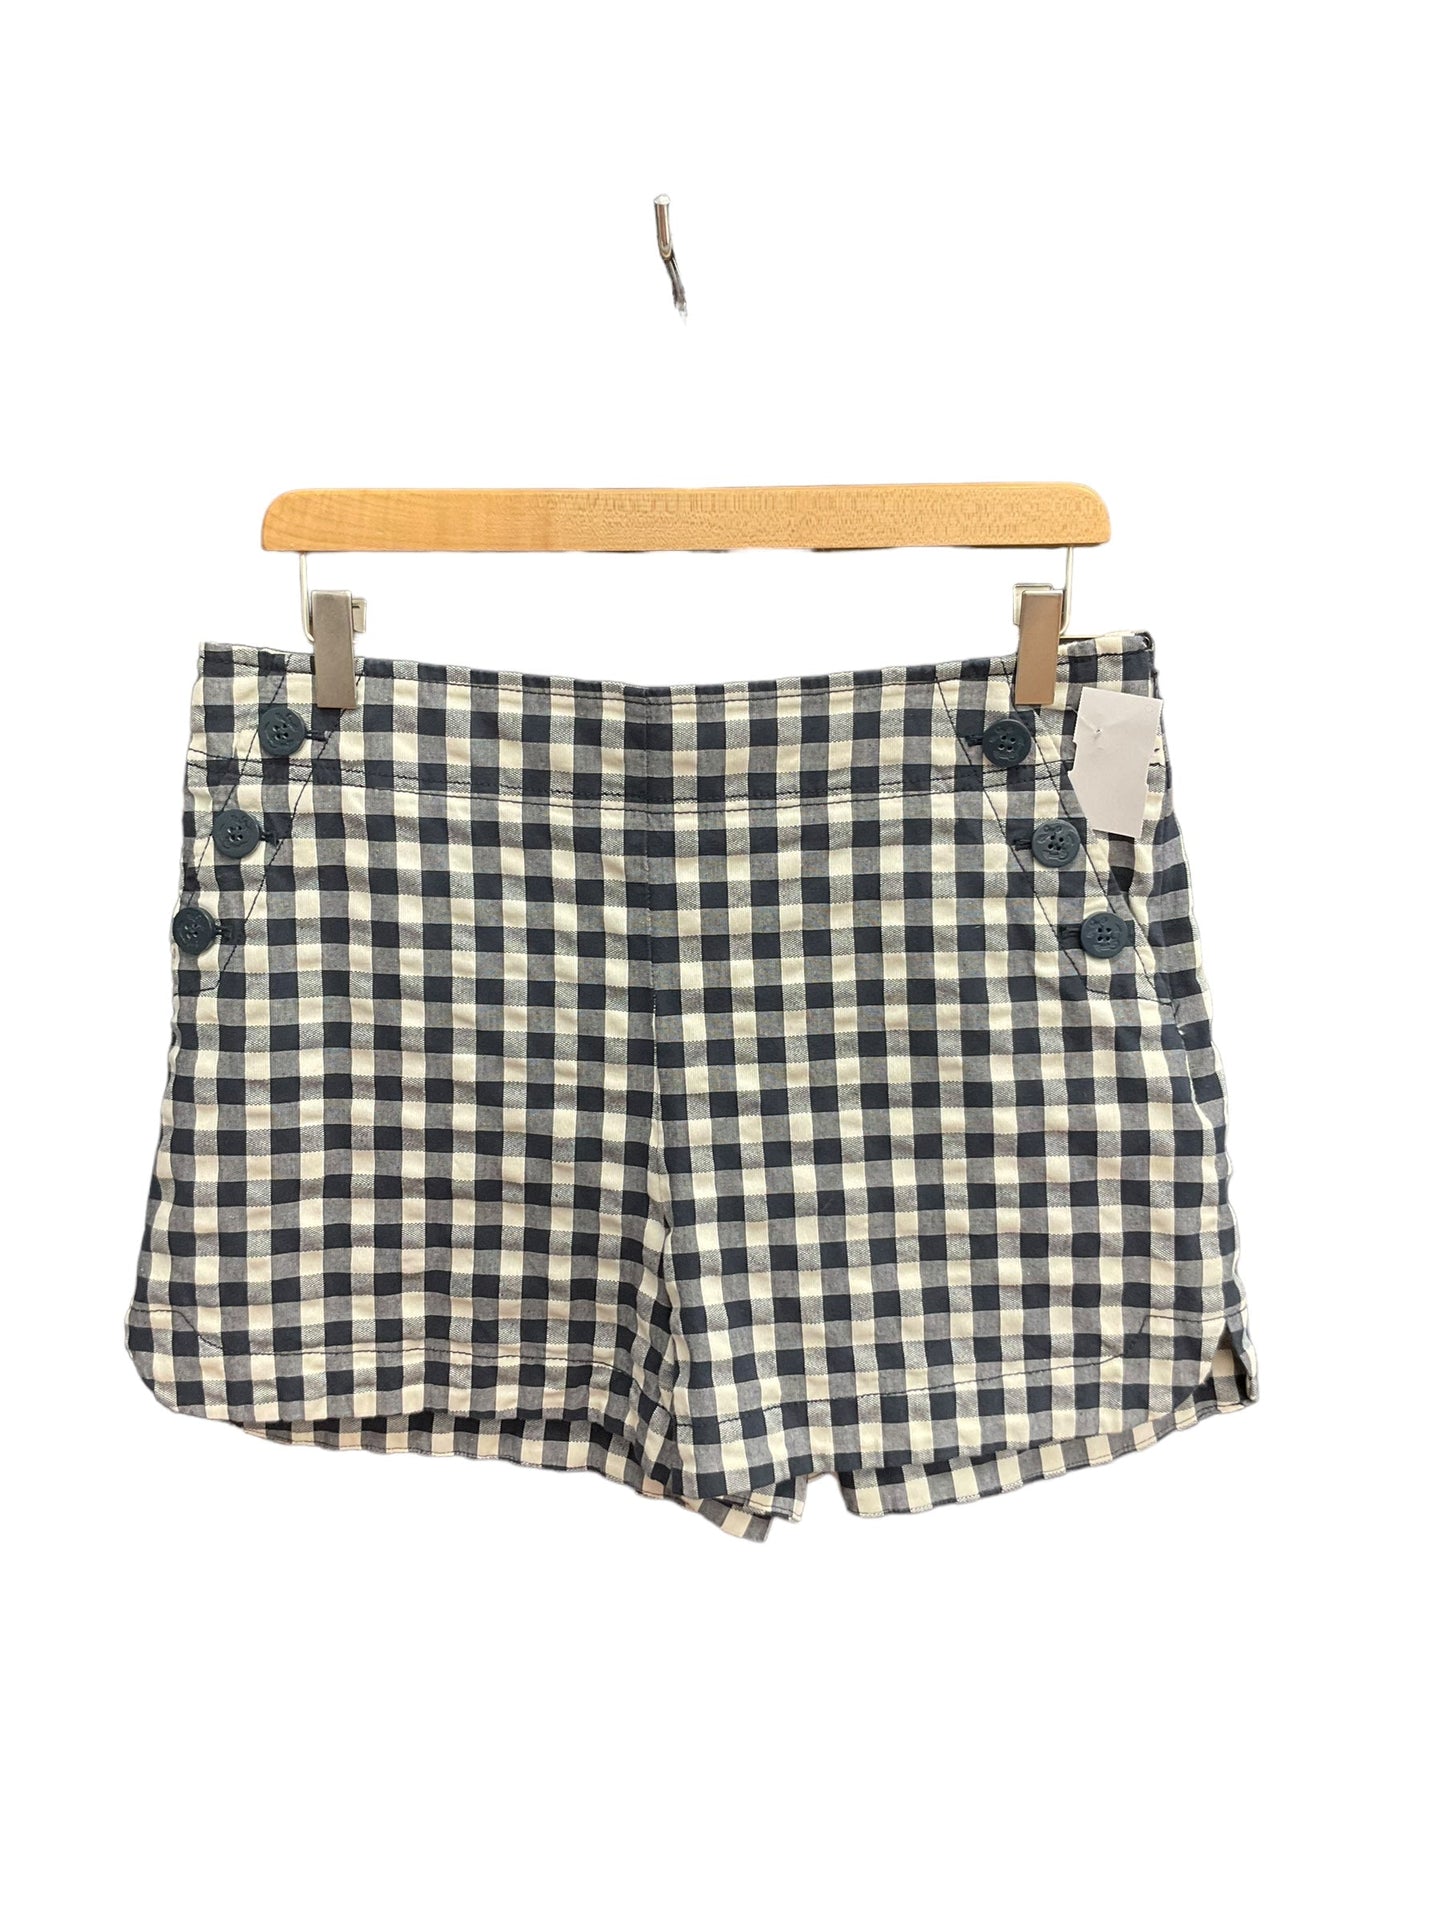 Plaid Pattern Shorts Loft, Size 8